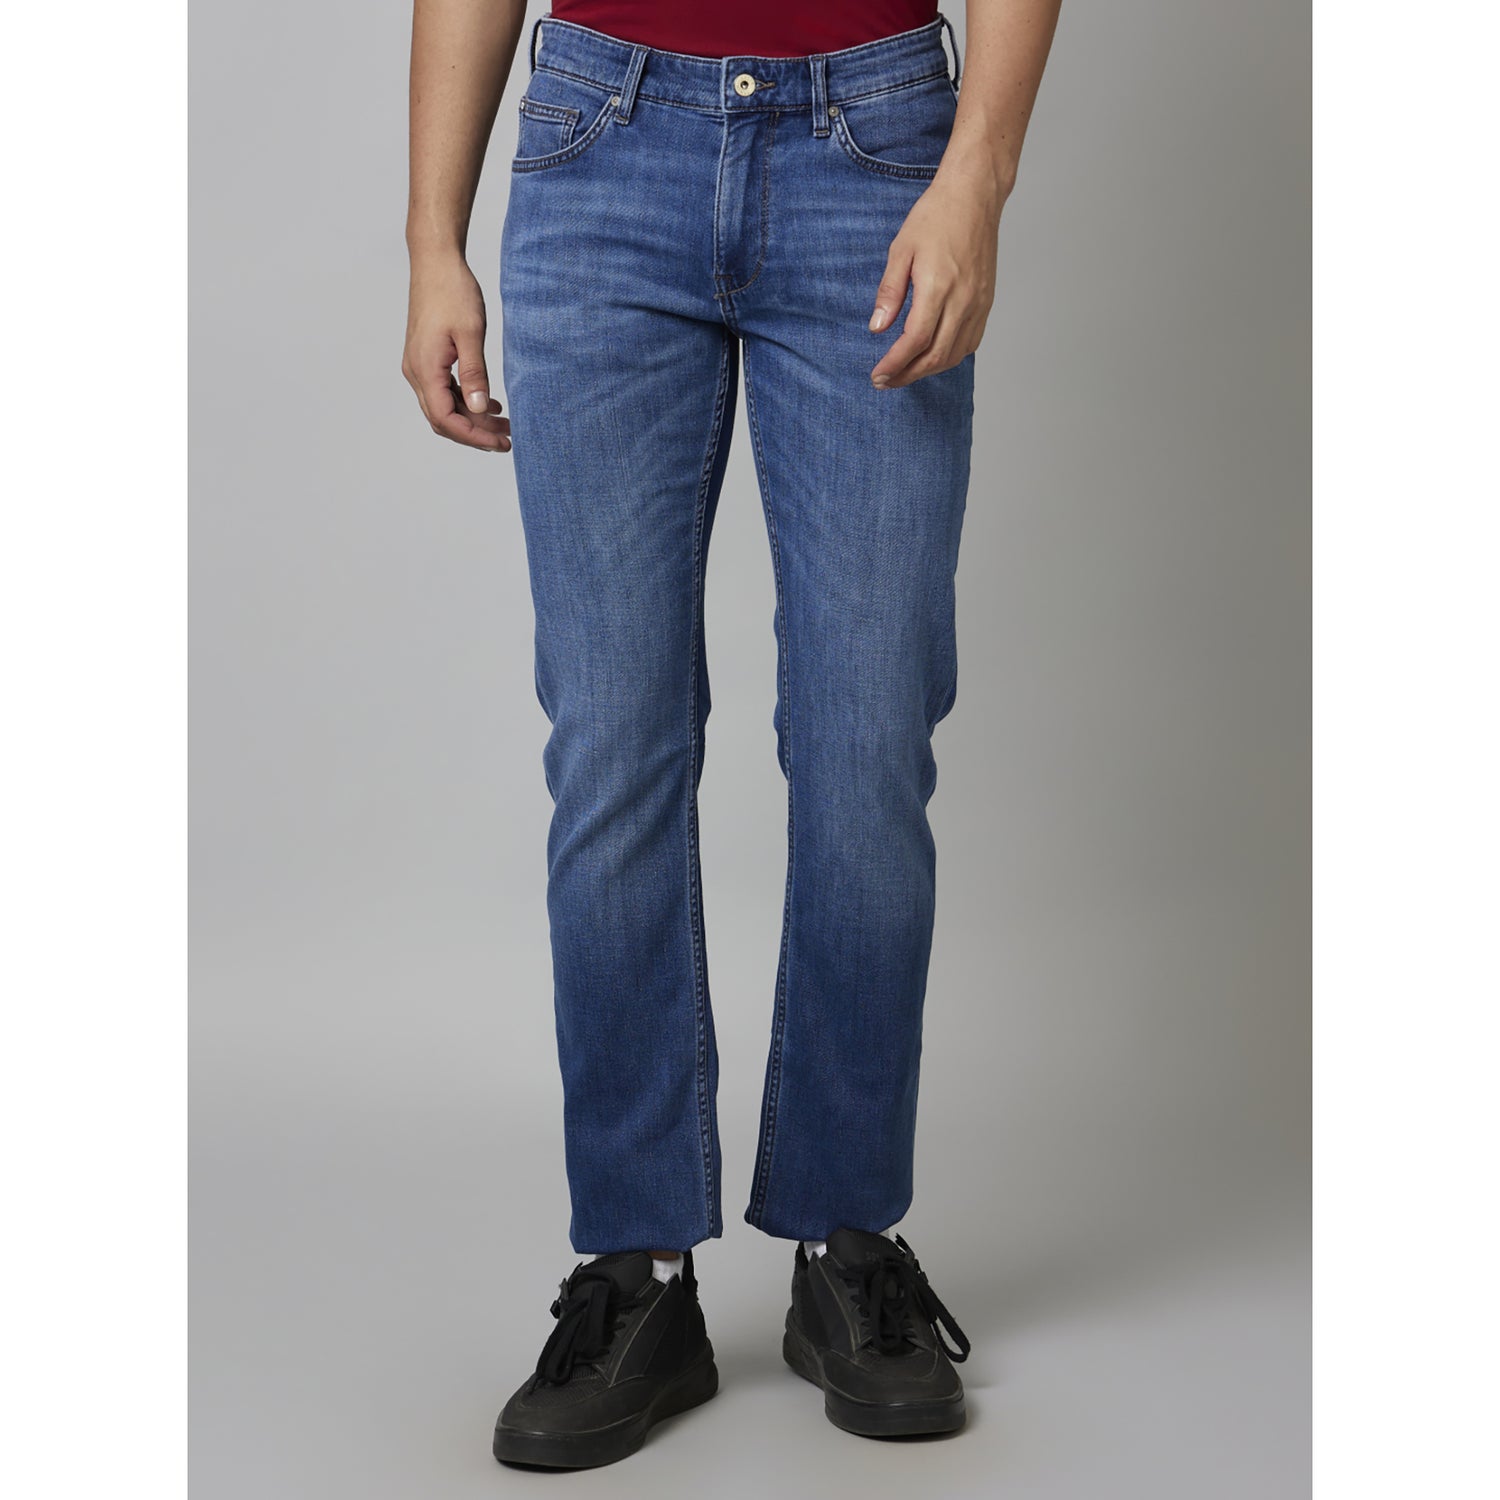 Indigo Solid Cotton Jeans (DOSOFT)